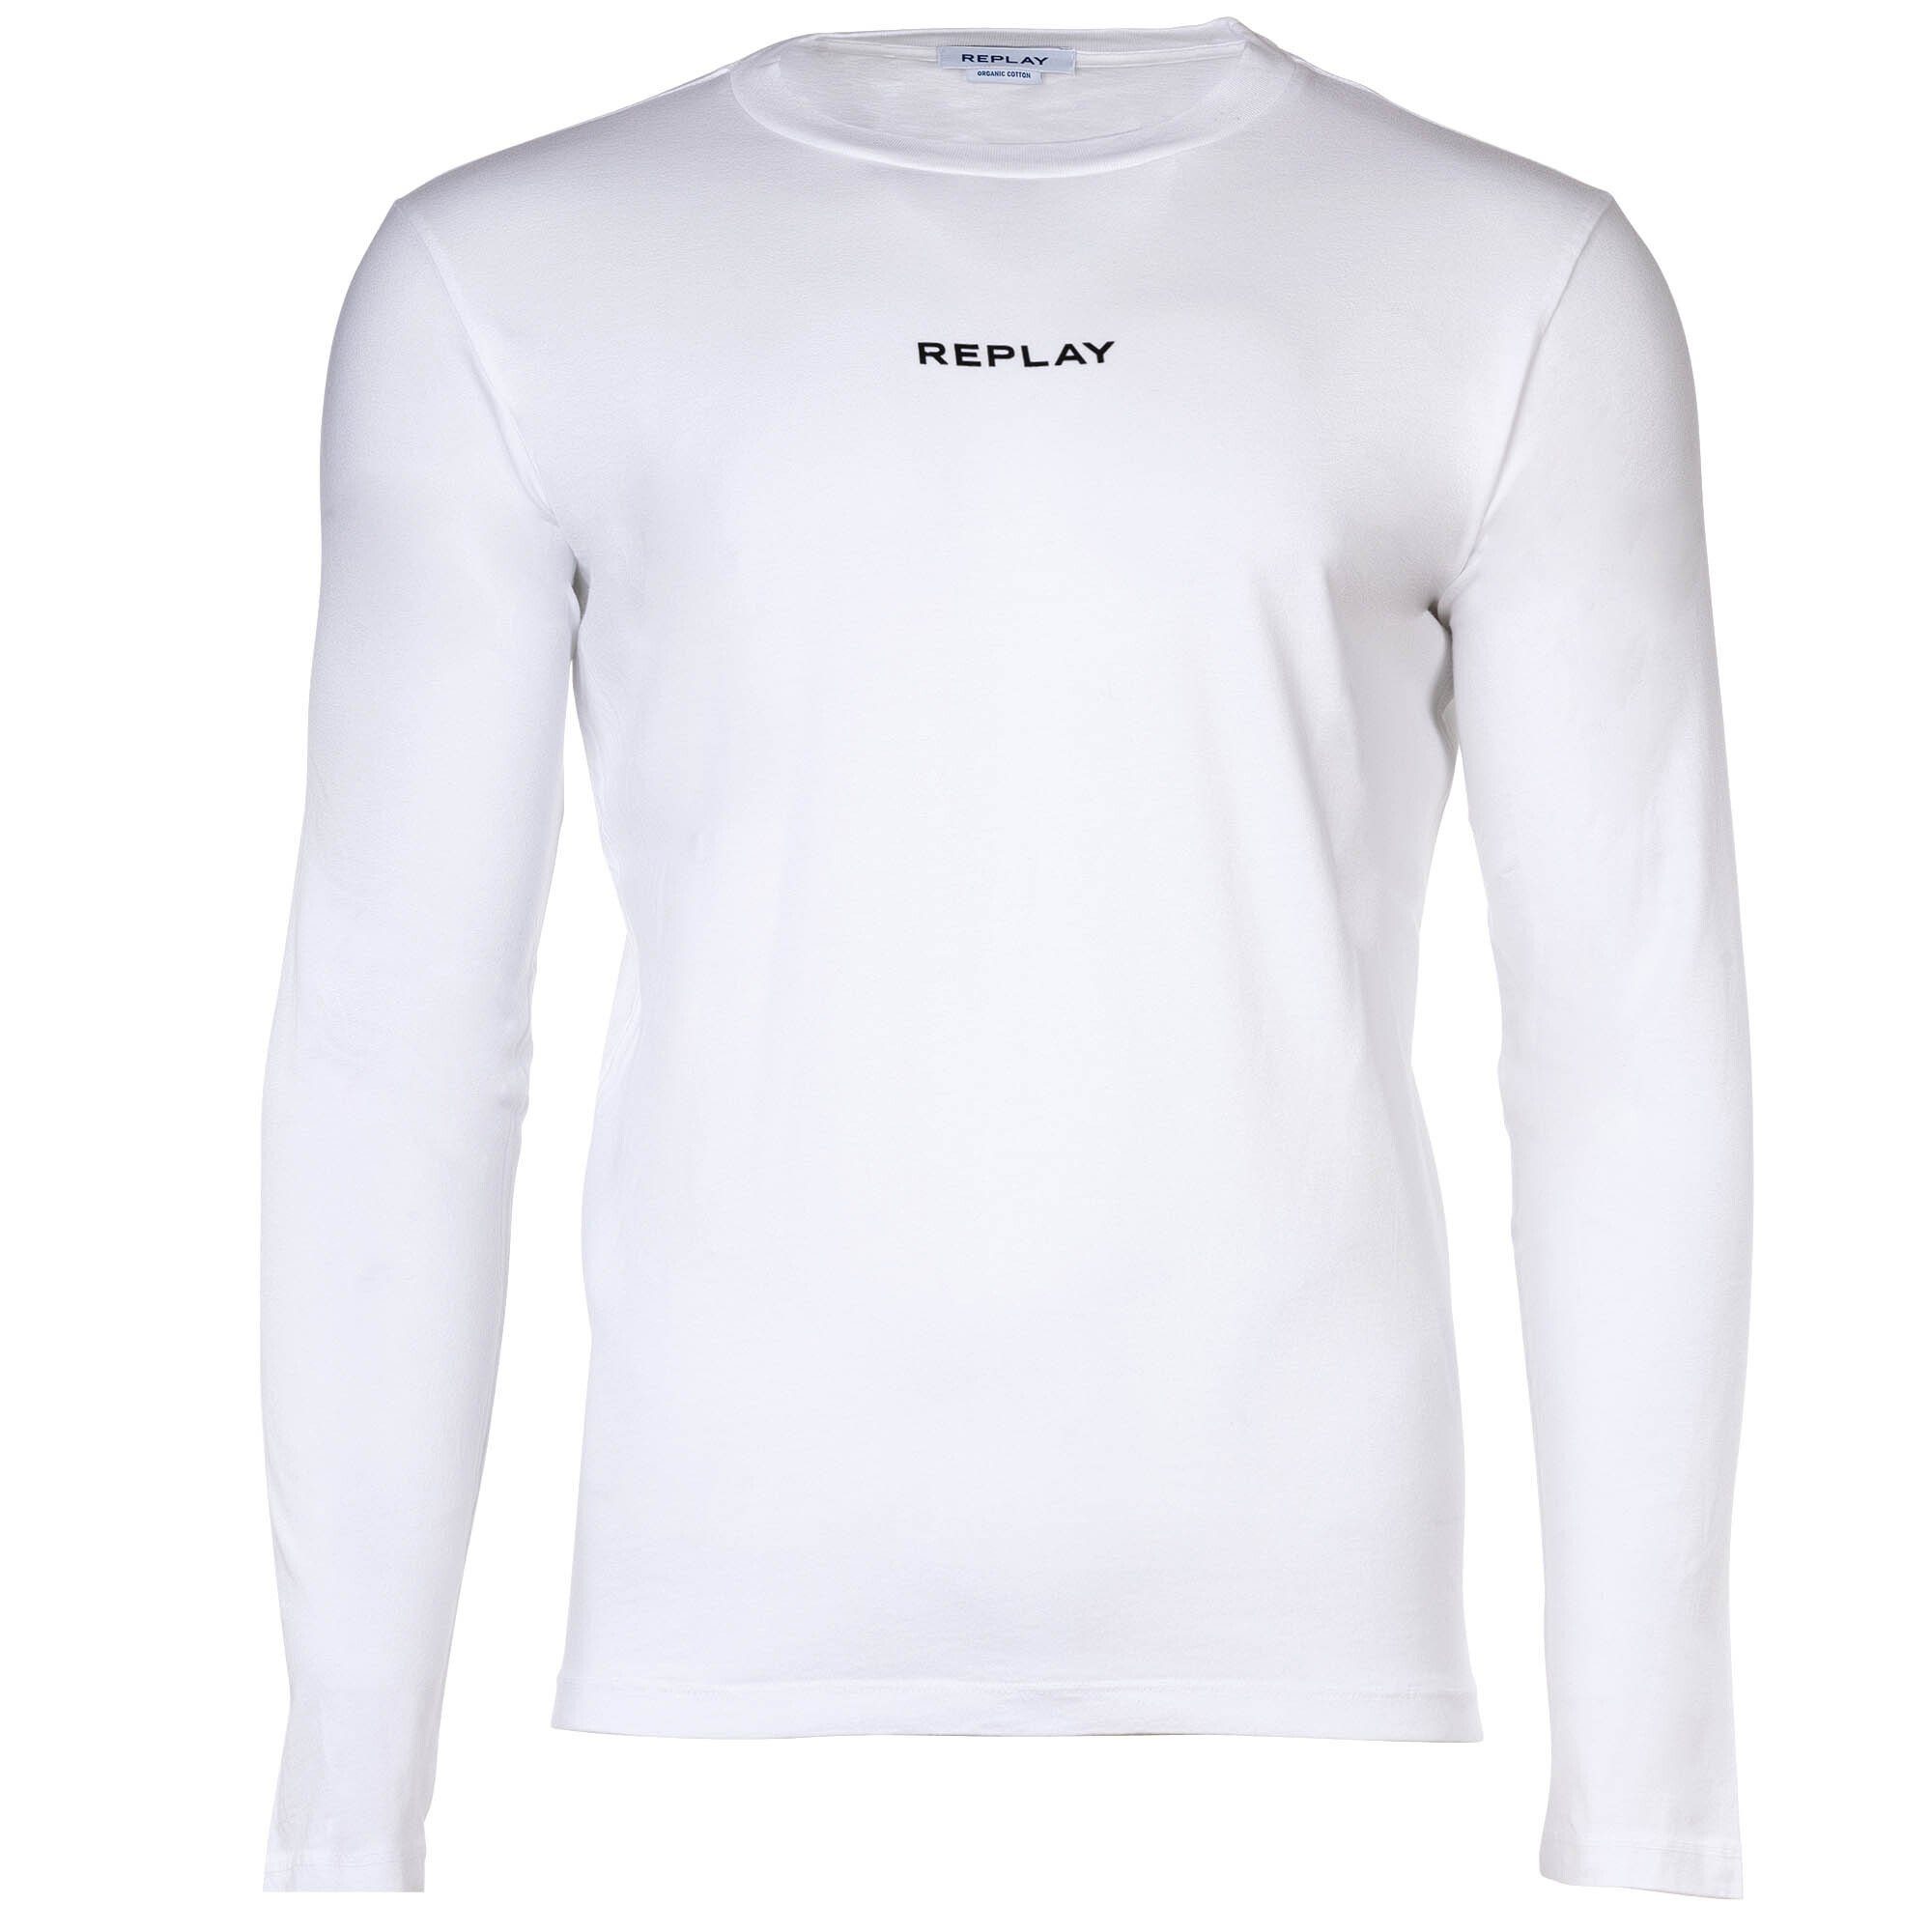 Replay T-Shirt Herren Longsleeve, Rundhals, Baumwolle, Jersey Weiß